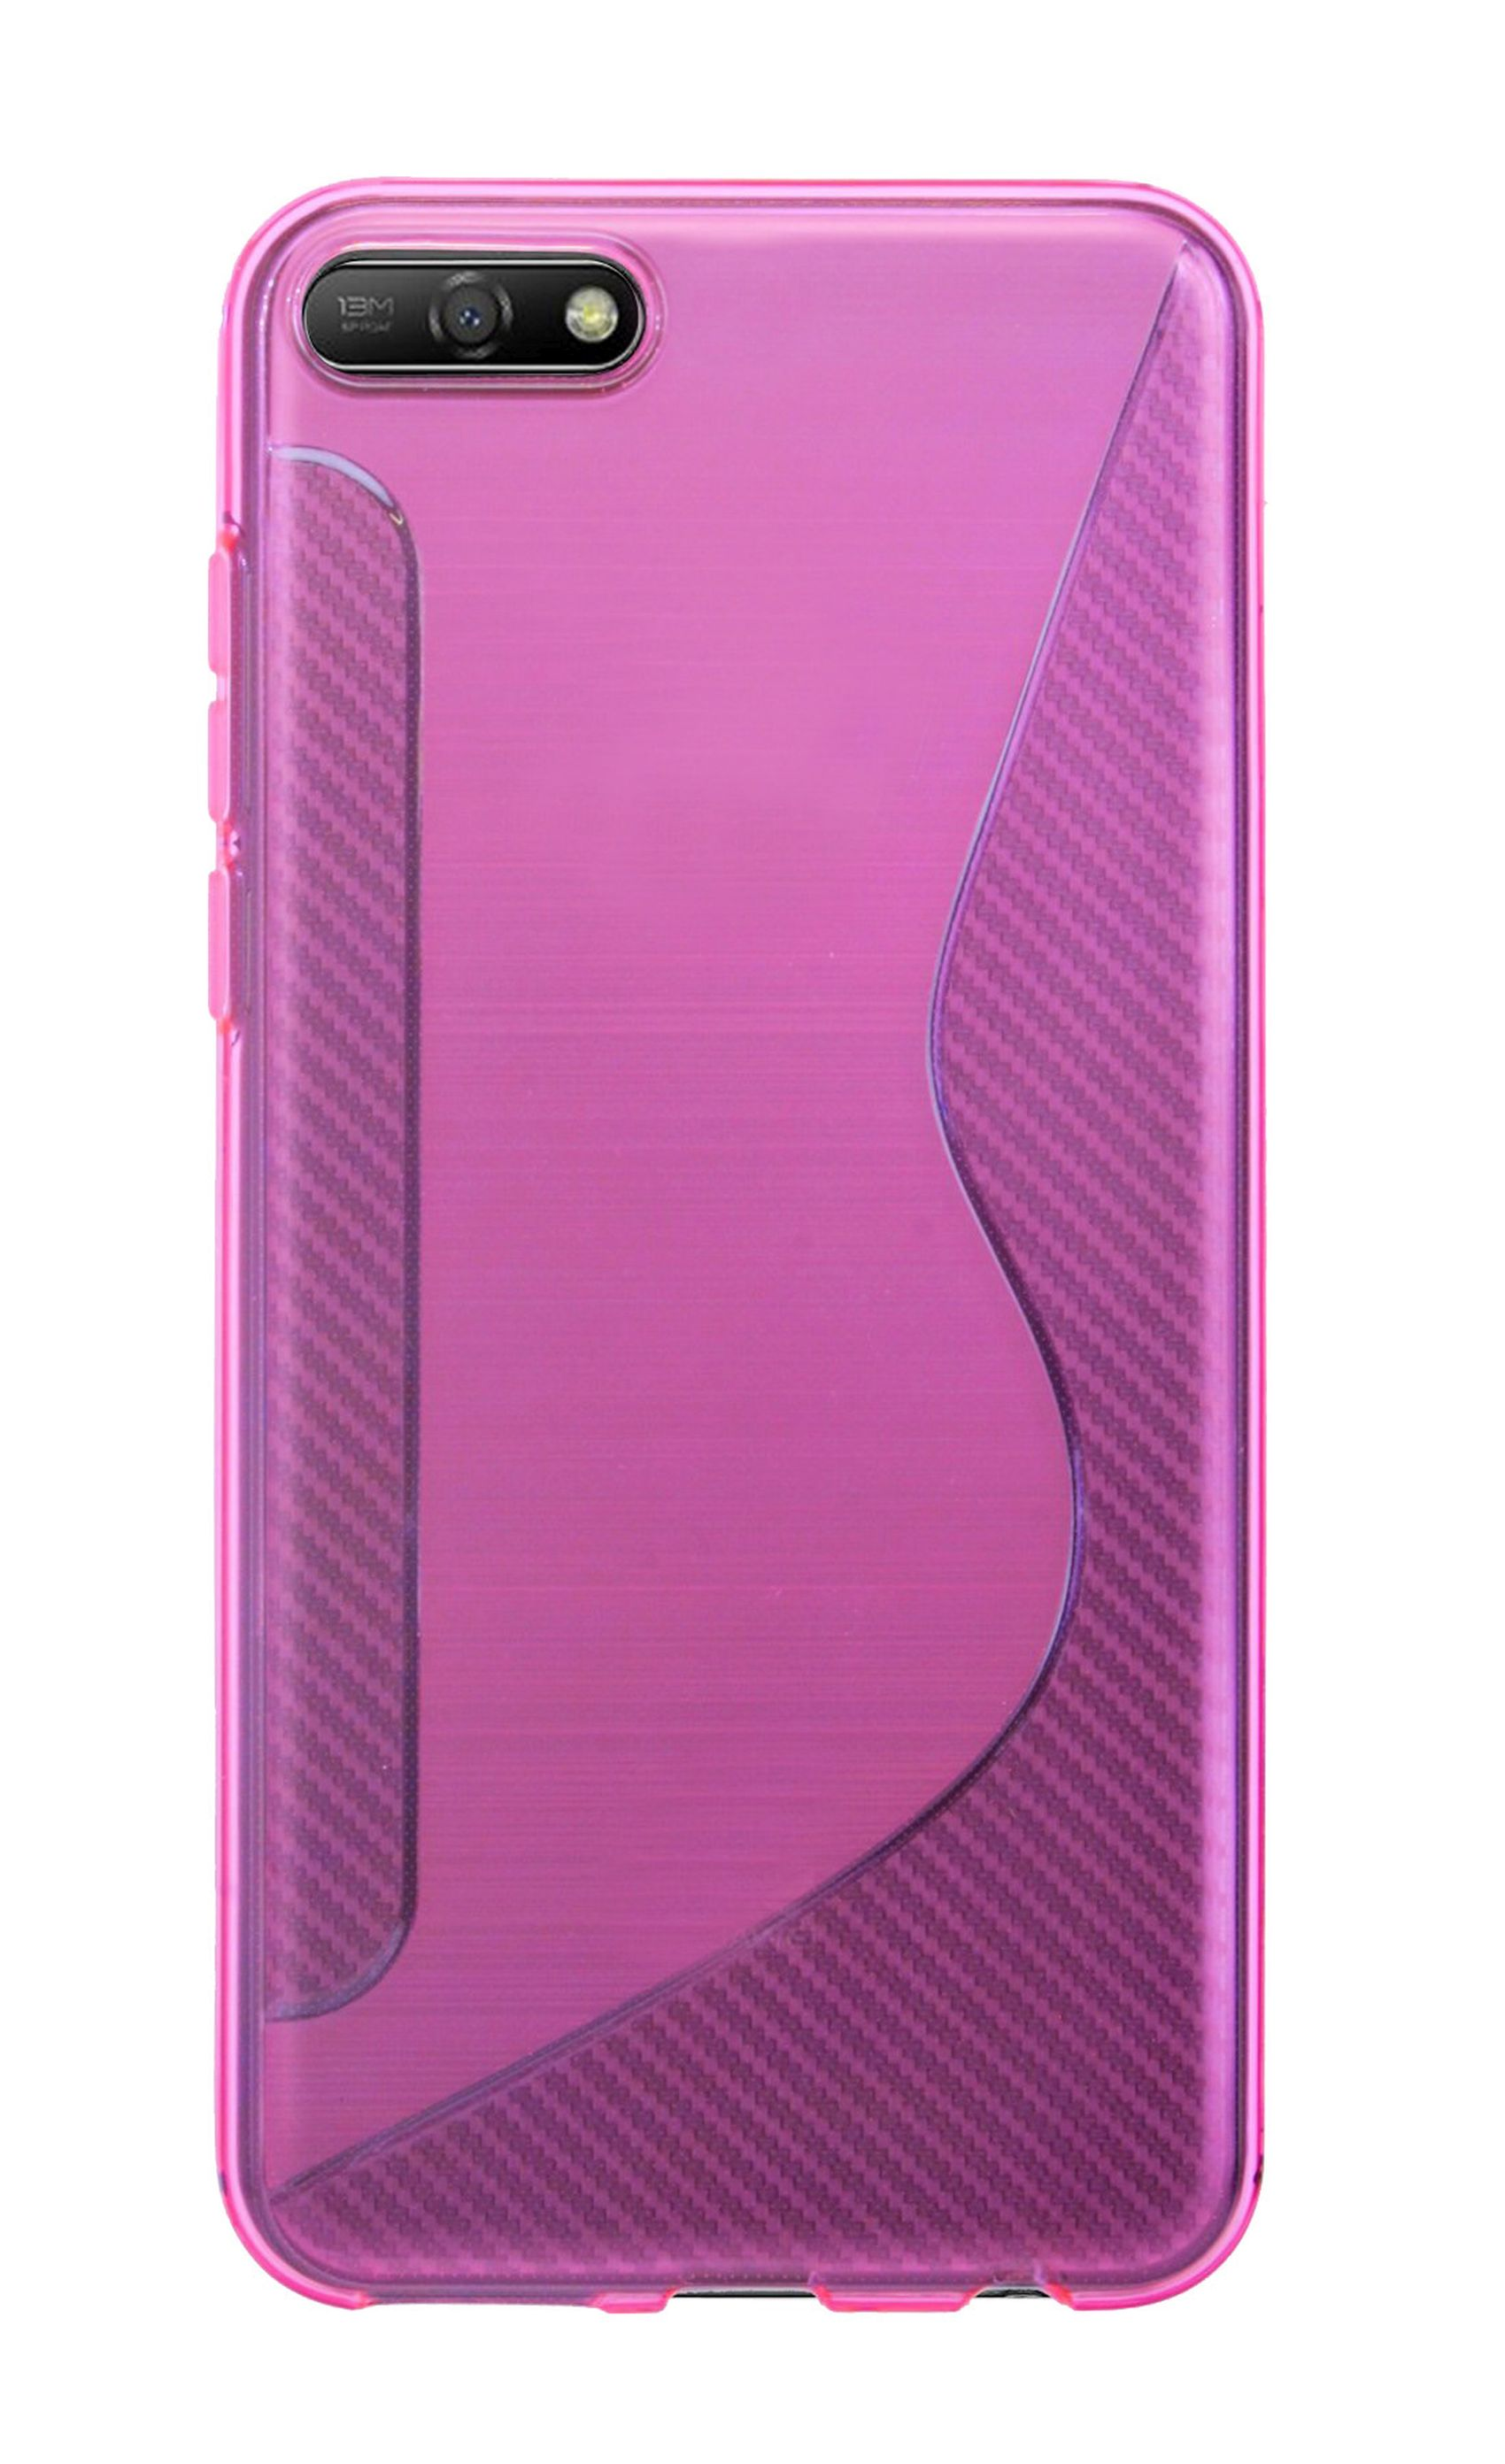 COFI Honor 7S Silikon Case Schutzhülle Schwarz Rosa Cover Handy Pink, Honor, 7S, Bumper